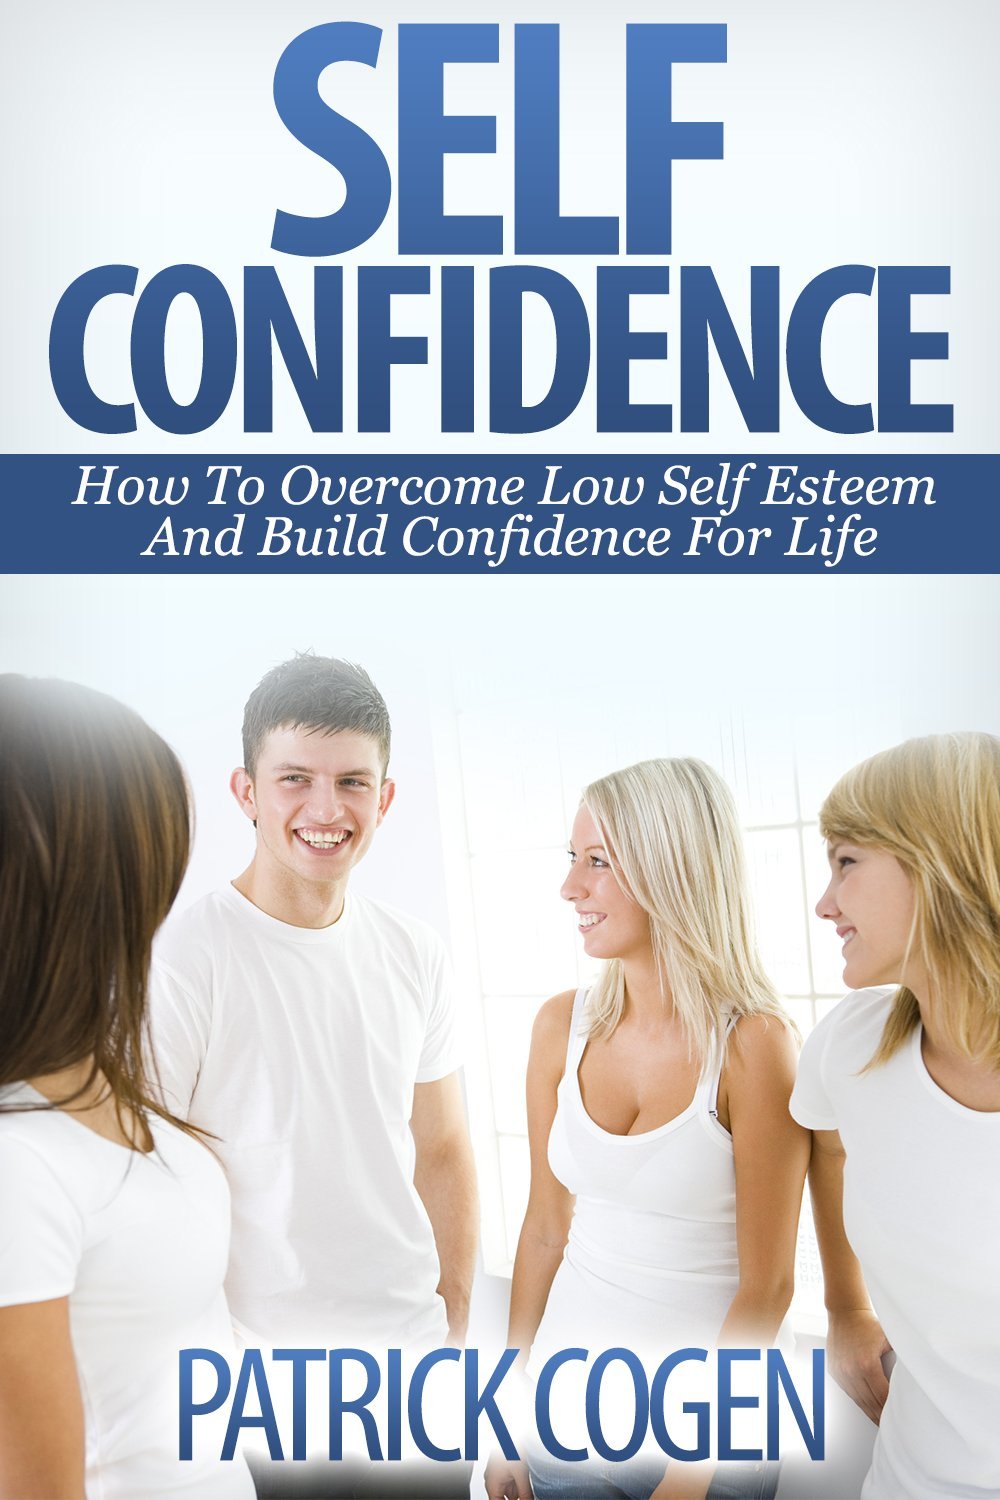 Self Confidence by Patrick Cogen